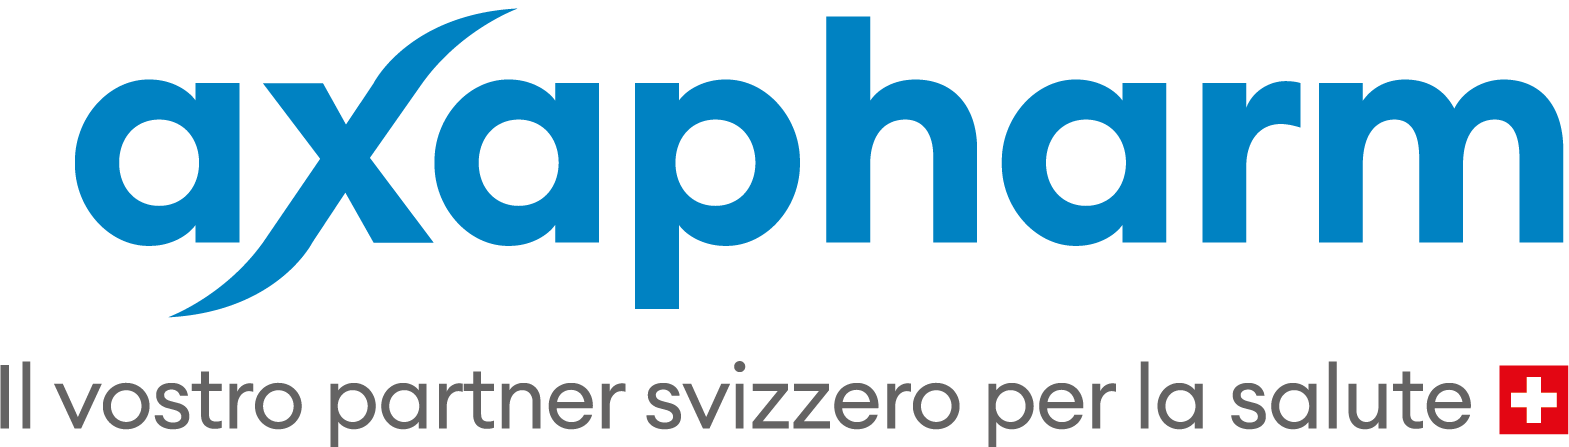 aha! Centro Allergie Svizzera - Sponsor - Logo - axapharm